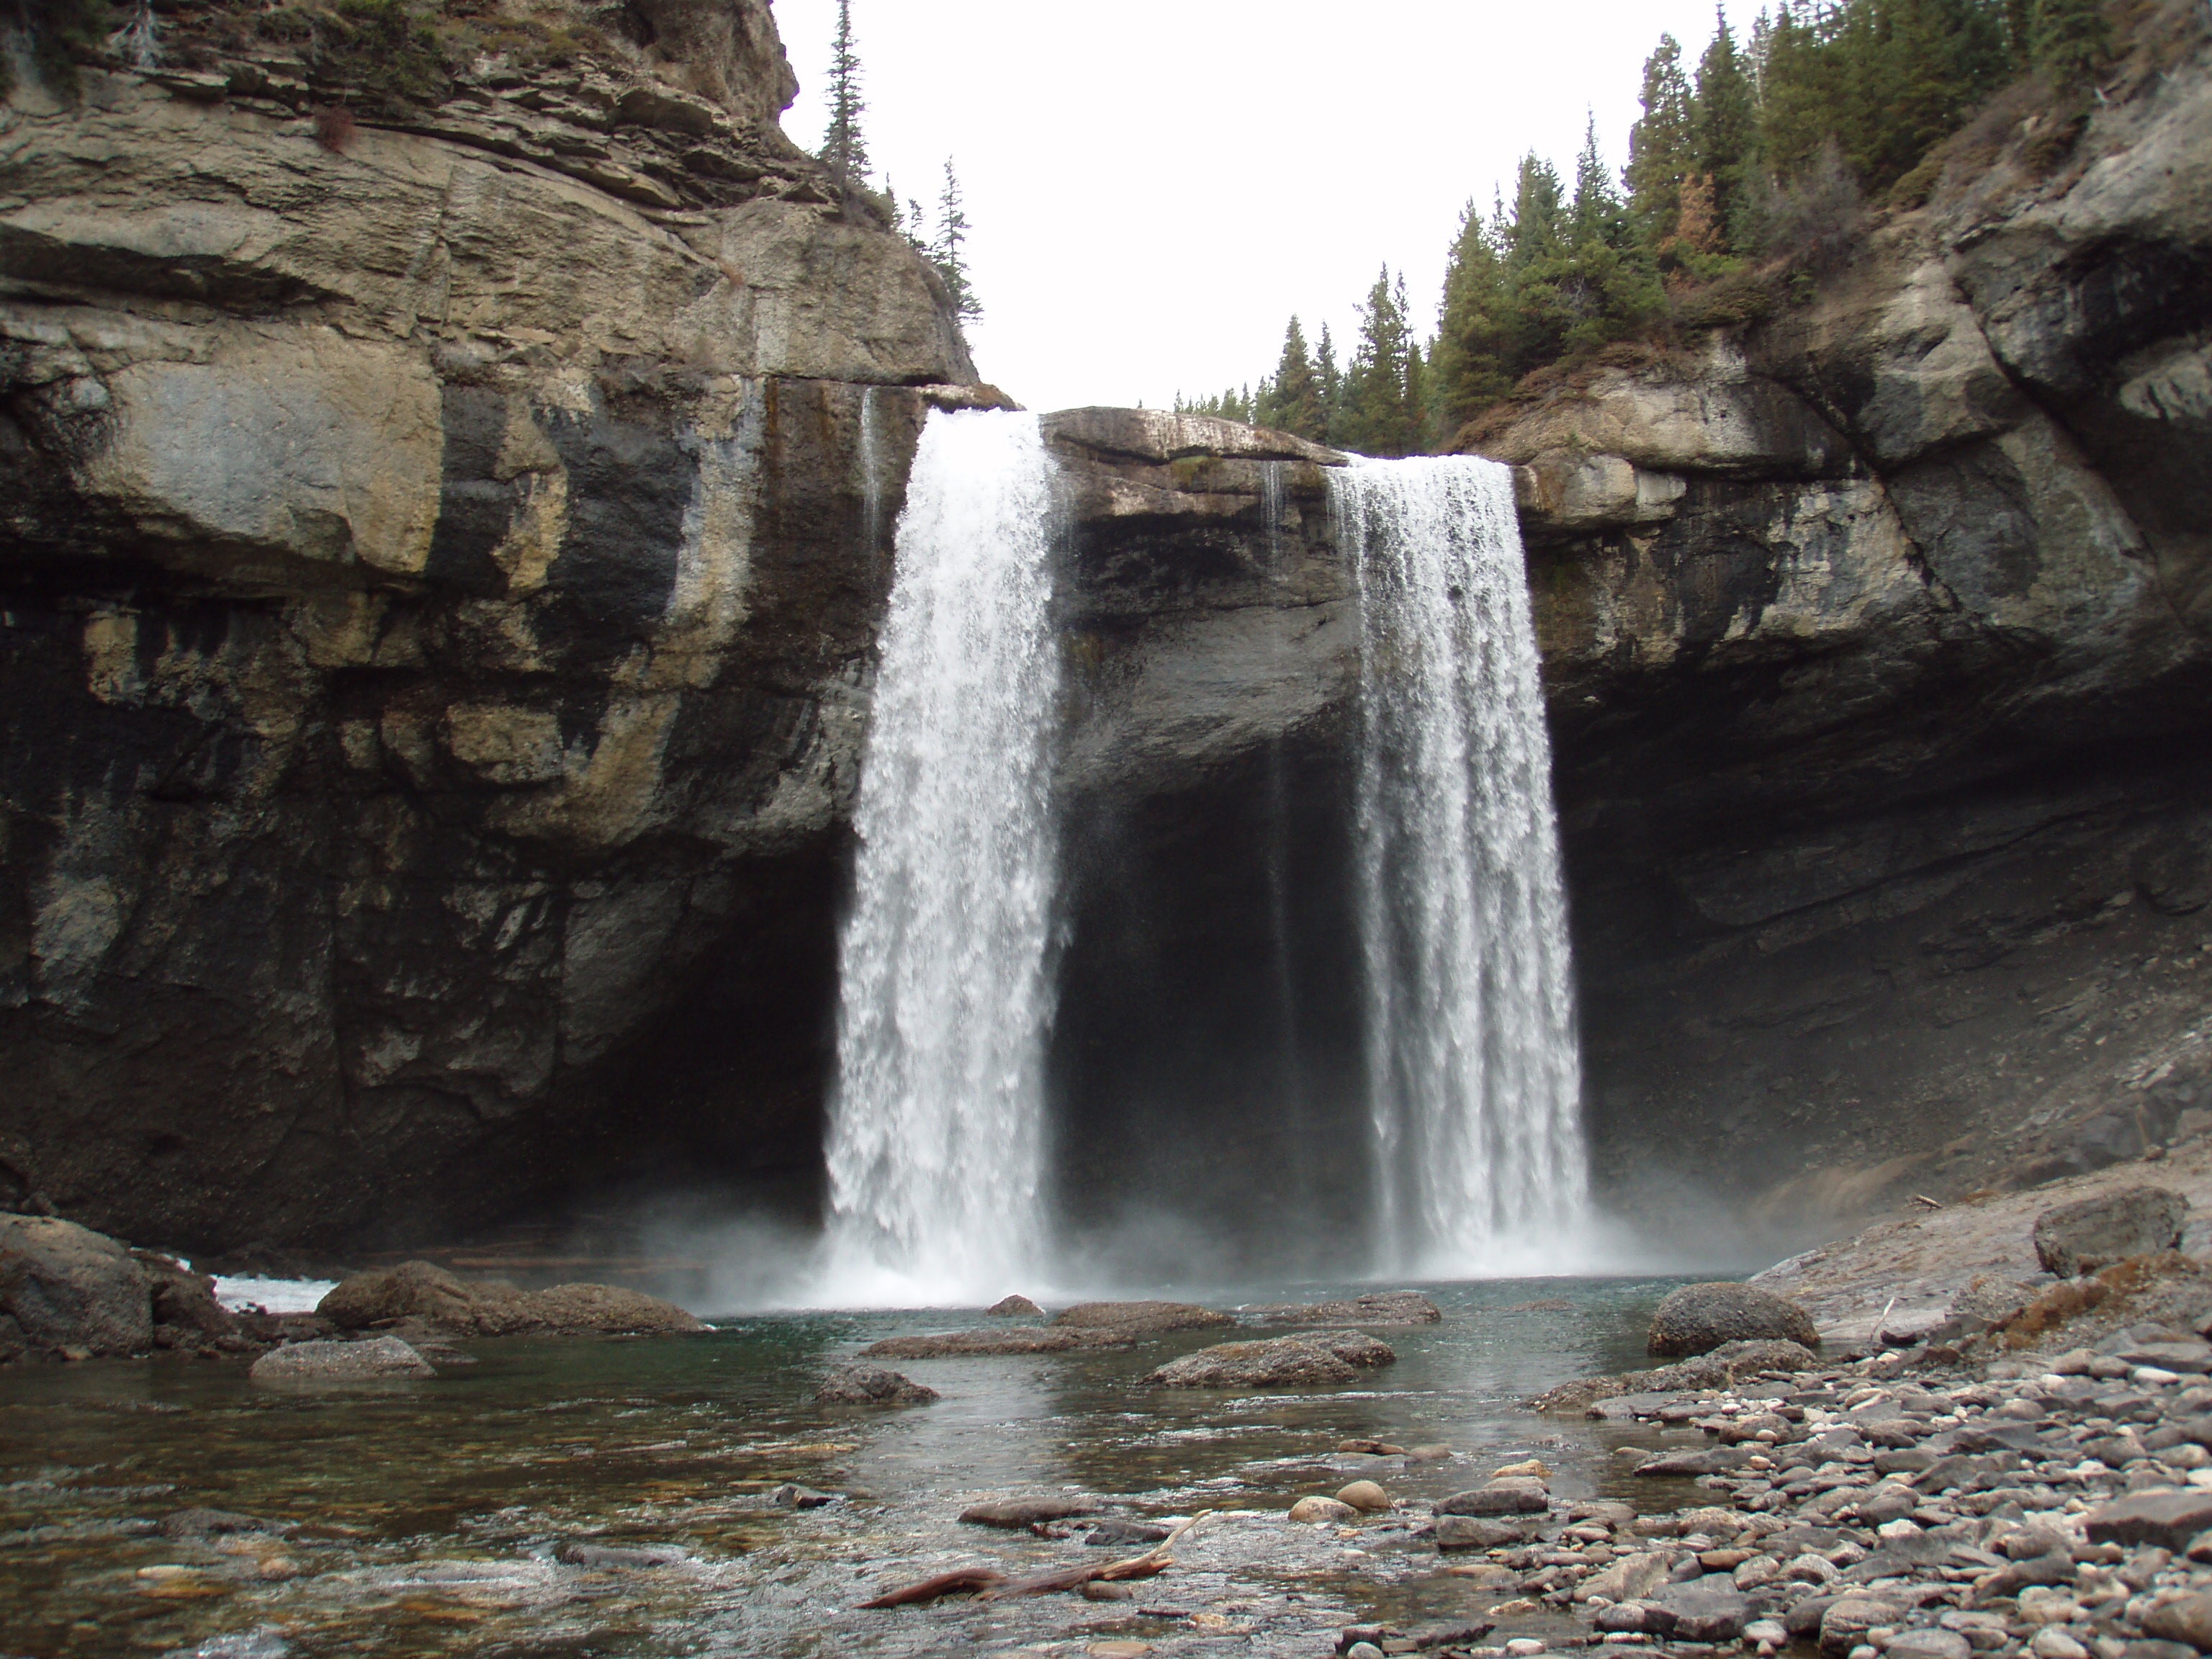 File:Canada waterfall 2.jpg - Wikimedia Commons